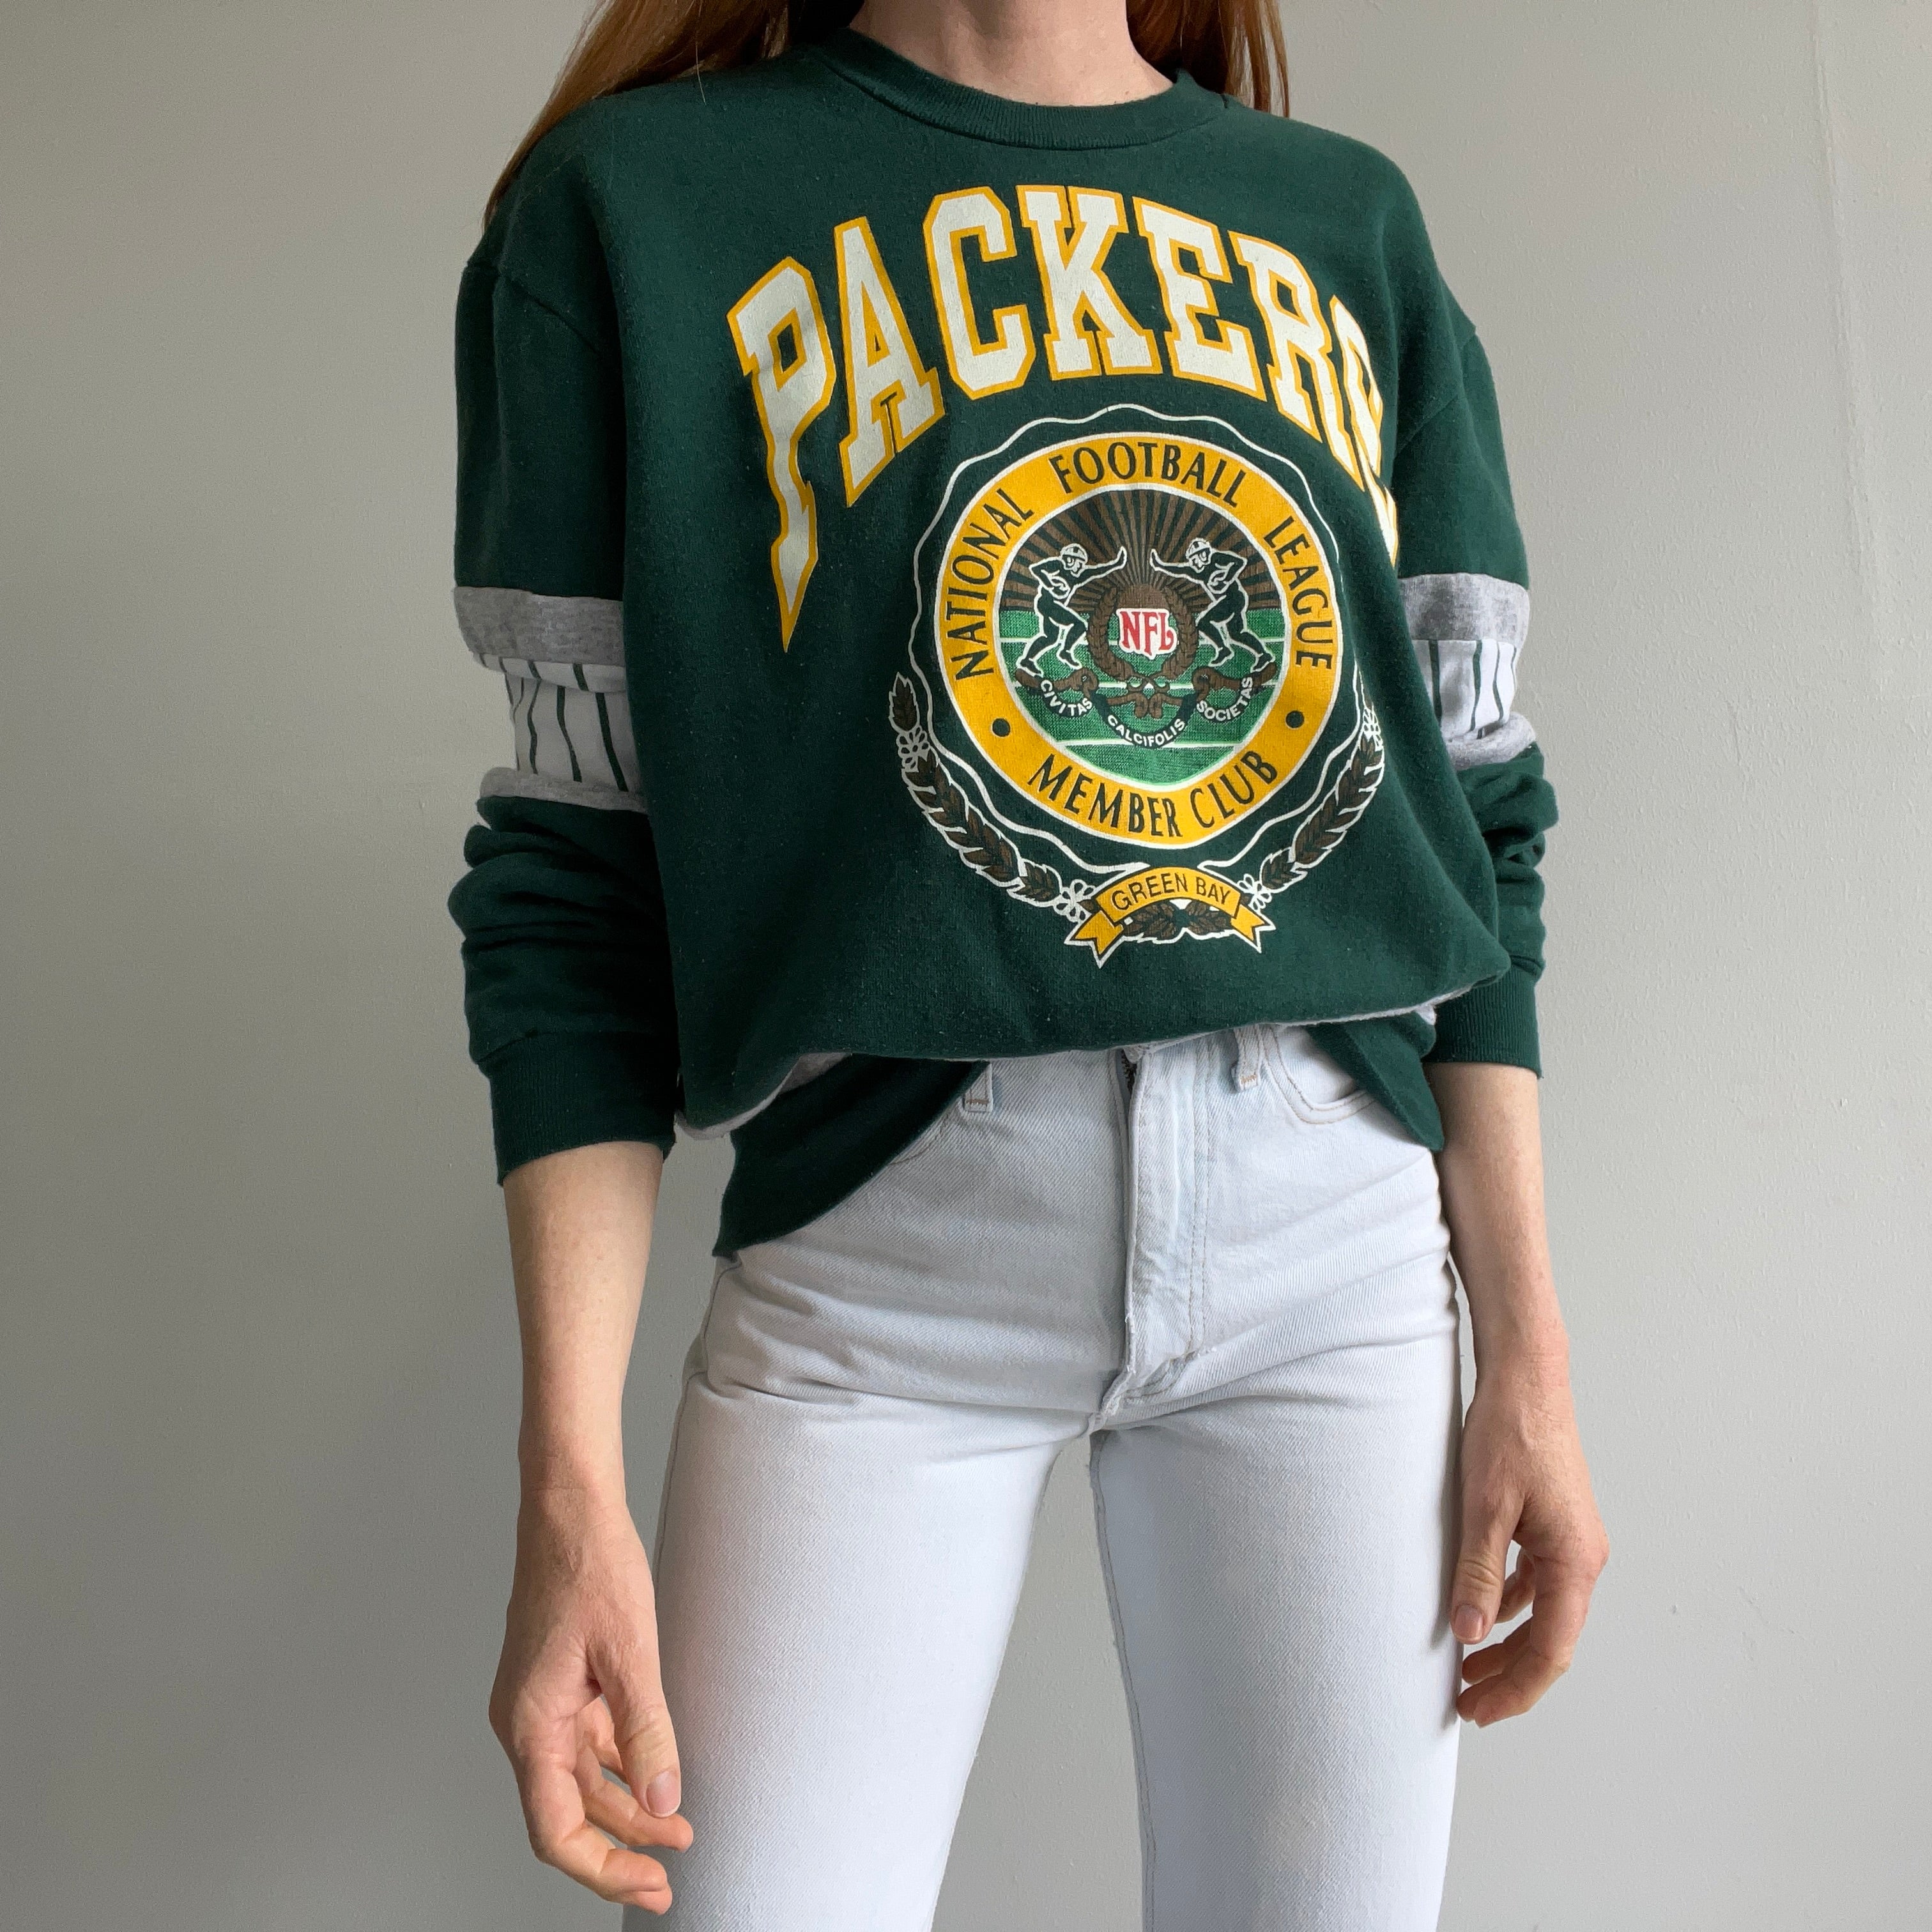 throwback green bay packers sweatshirt